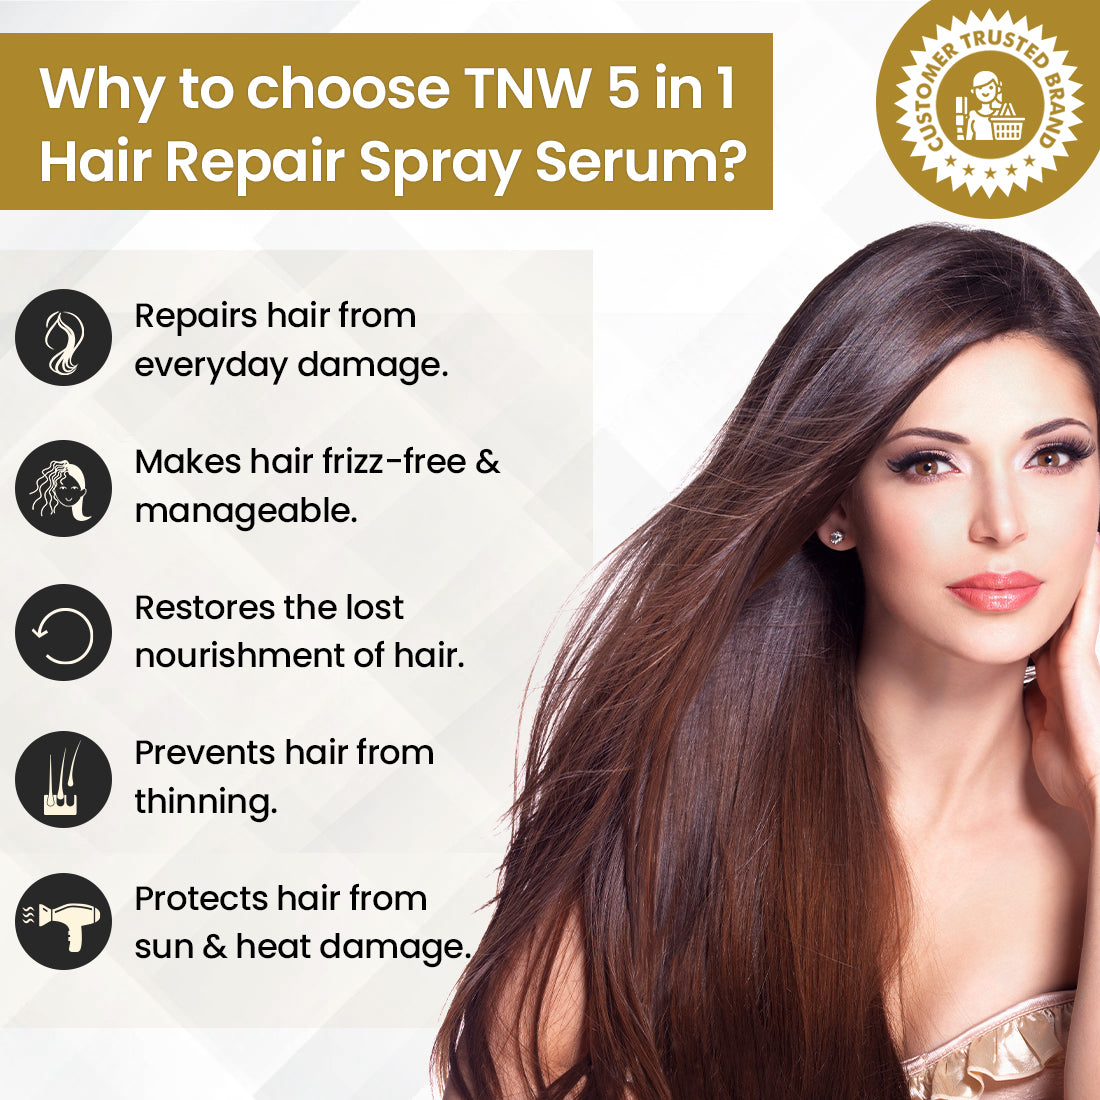 5-in-1 Hair Repair Spray Serum for Frizz-Free & Manageable Hair